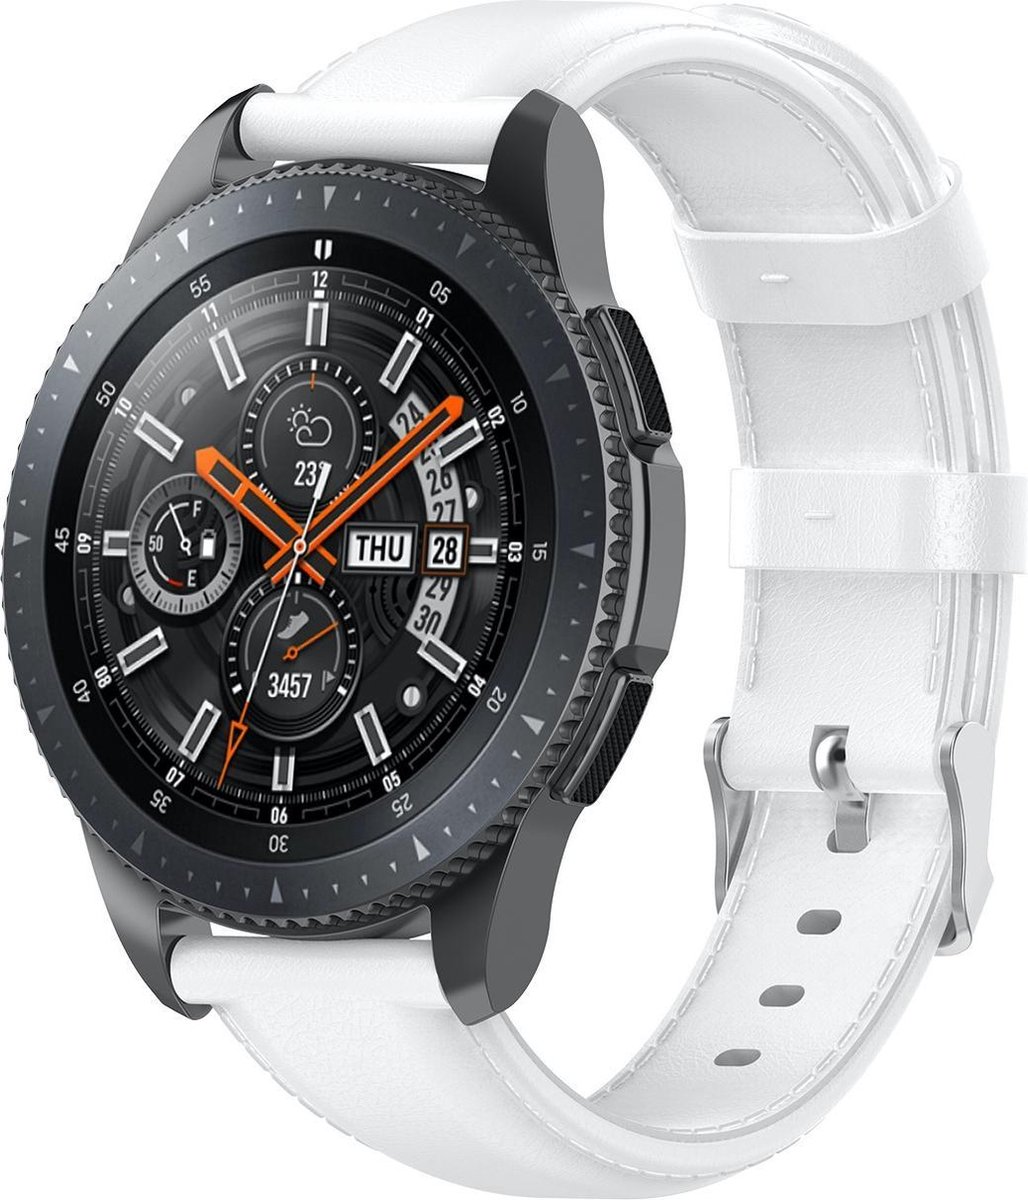 Samsung Galaxy Watch leren band - wit - Horlogeband Armband Polsband